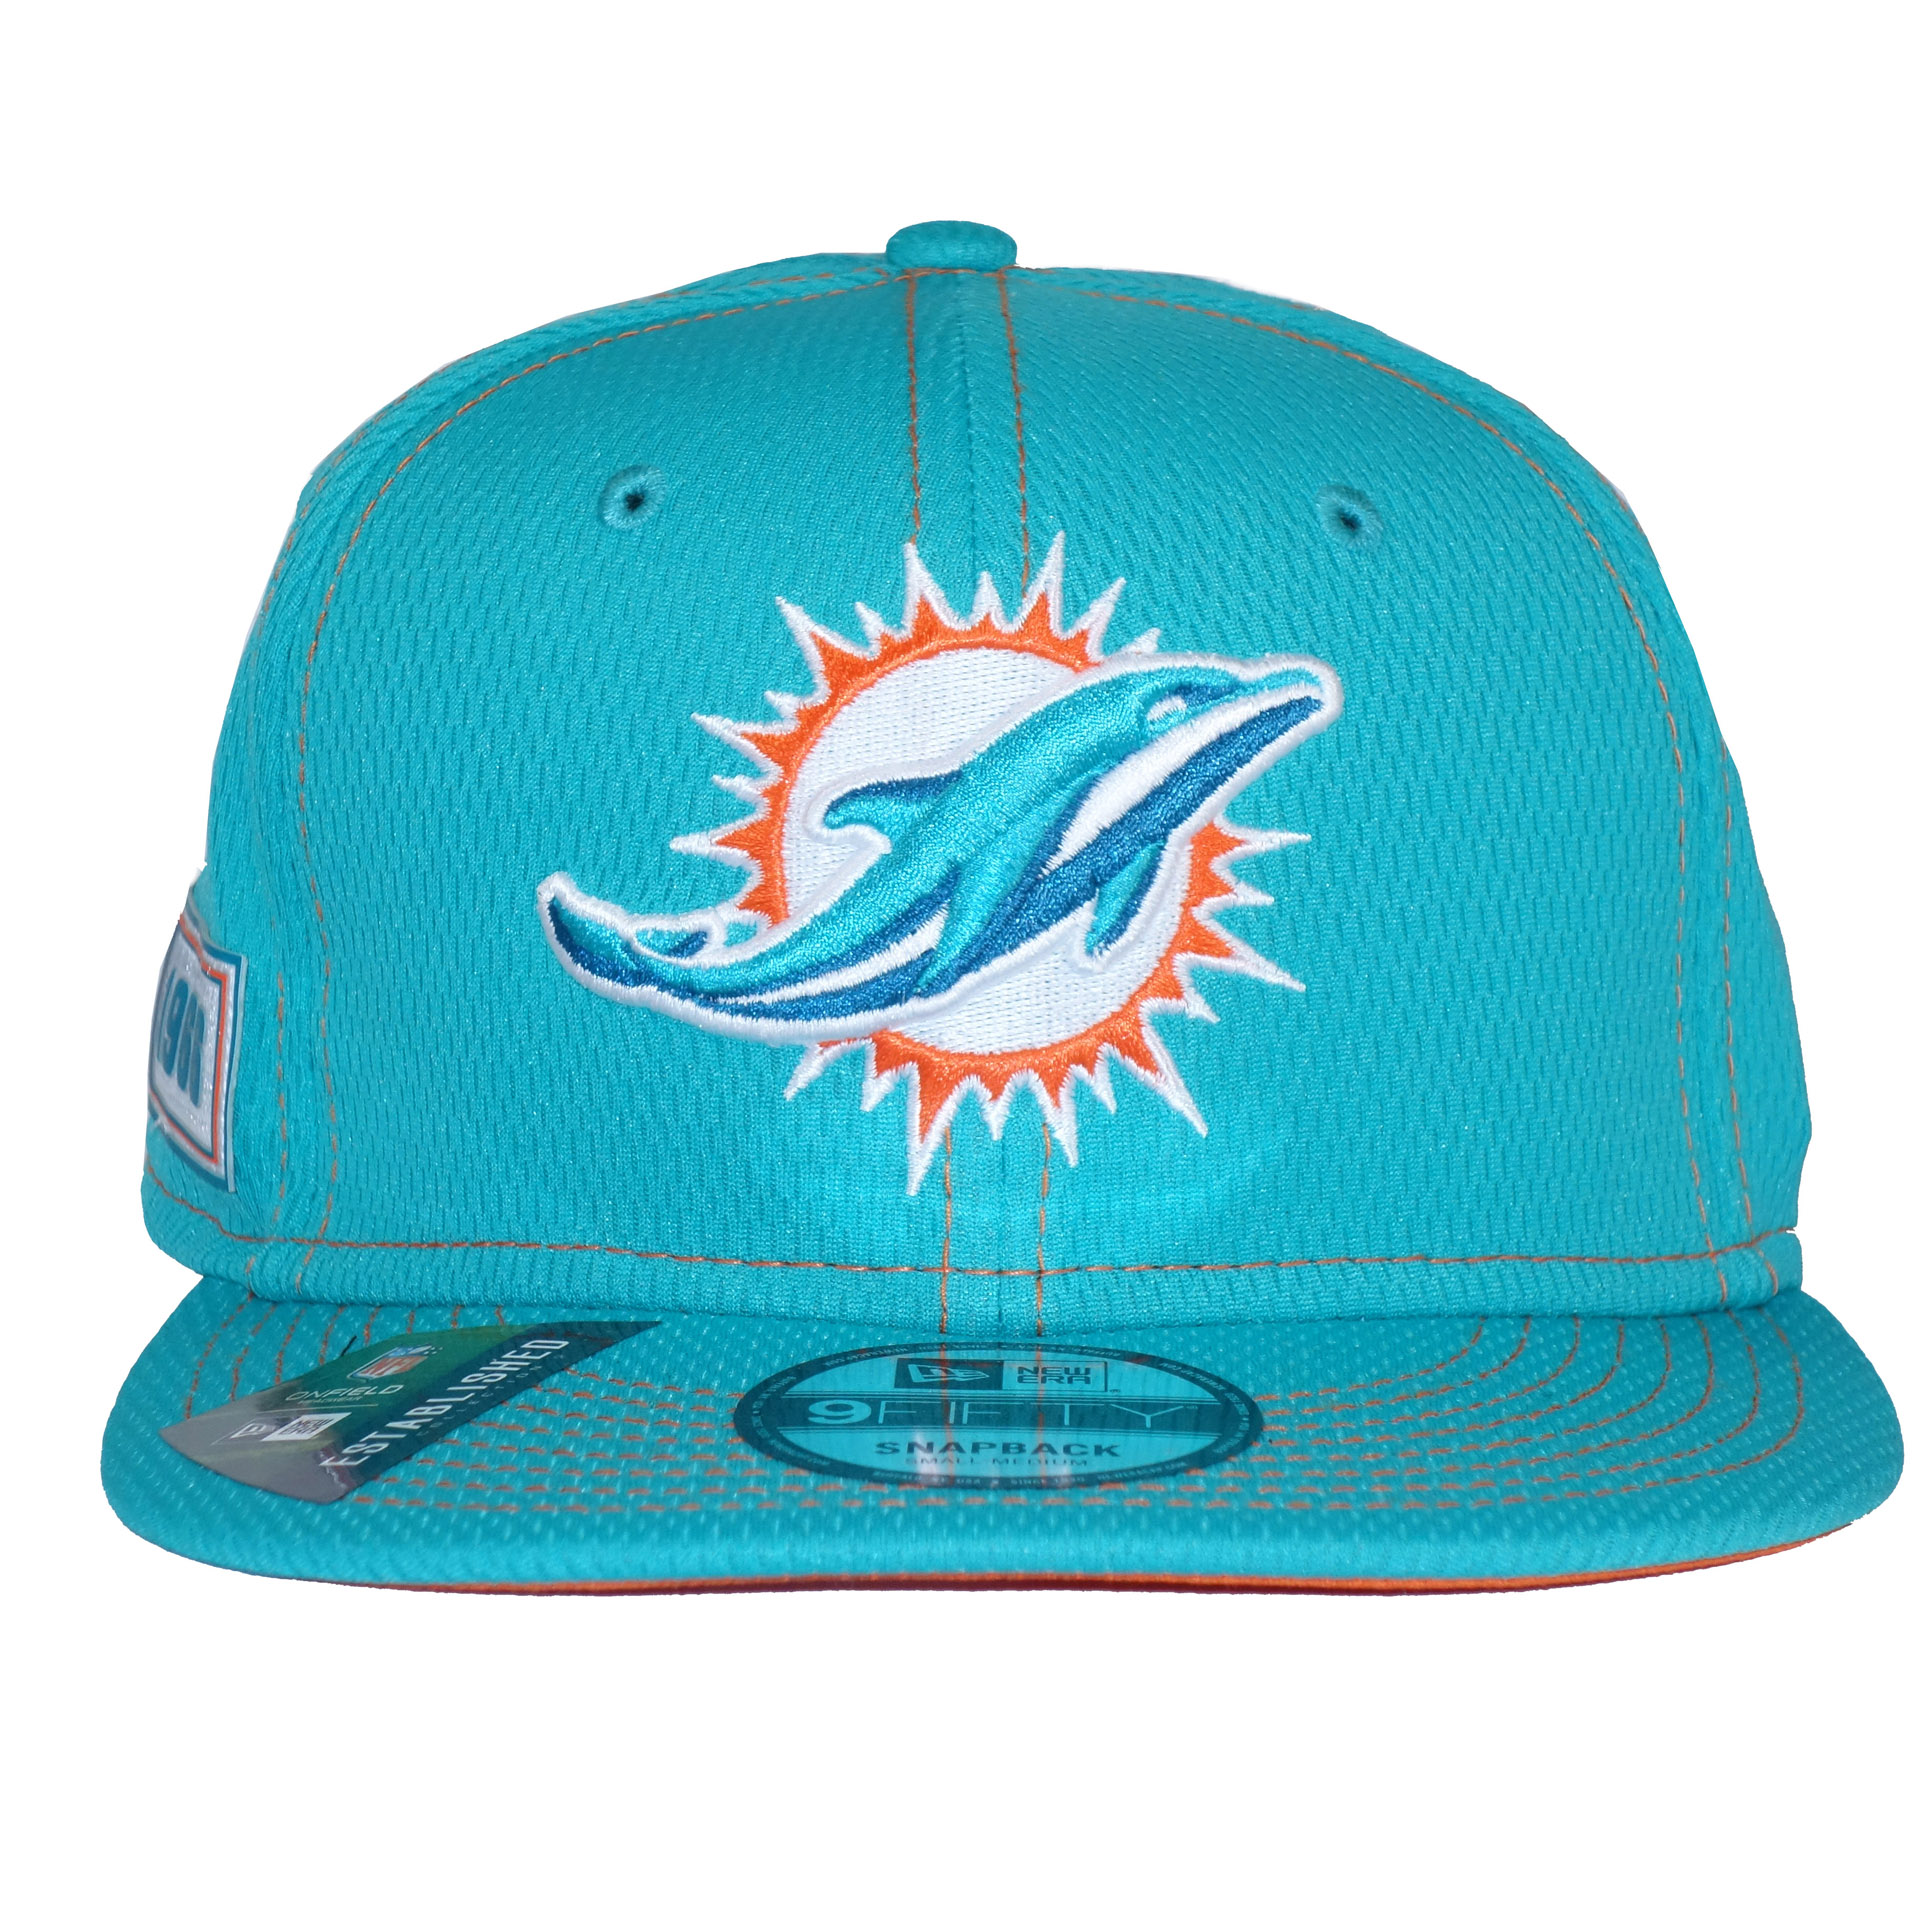 NFL New Era Cap Miami Dolphins 